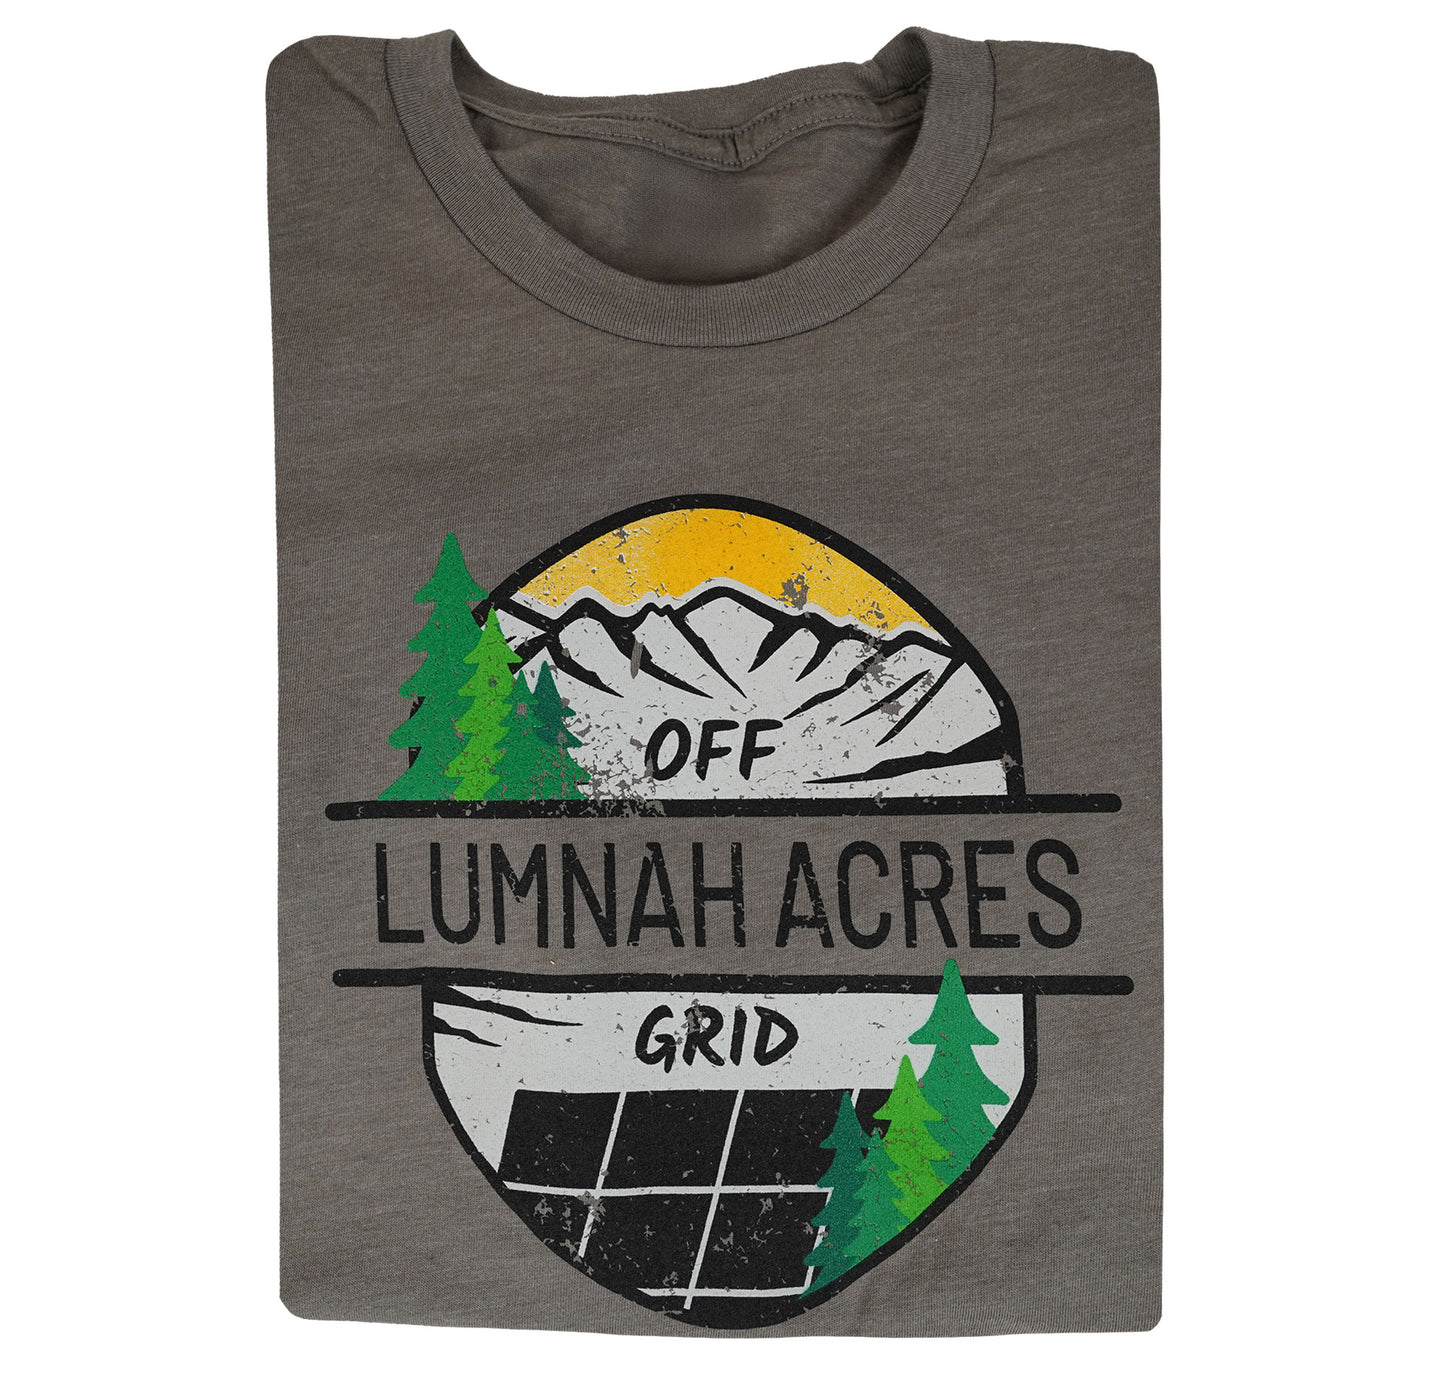 Lumnah Acres Oval Logo T-Shirt, Warm Grey